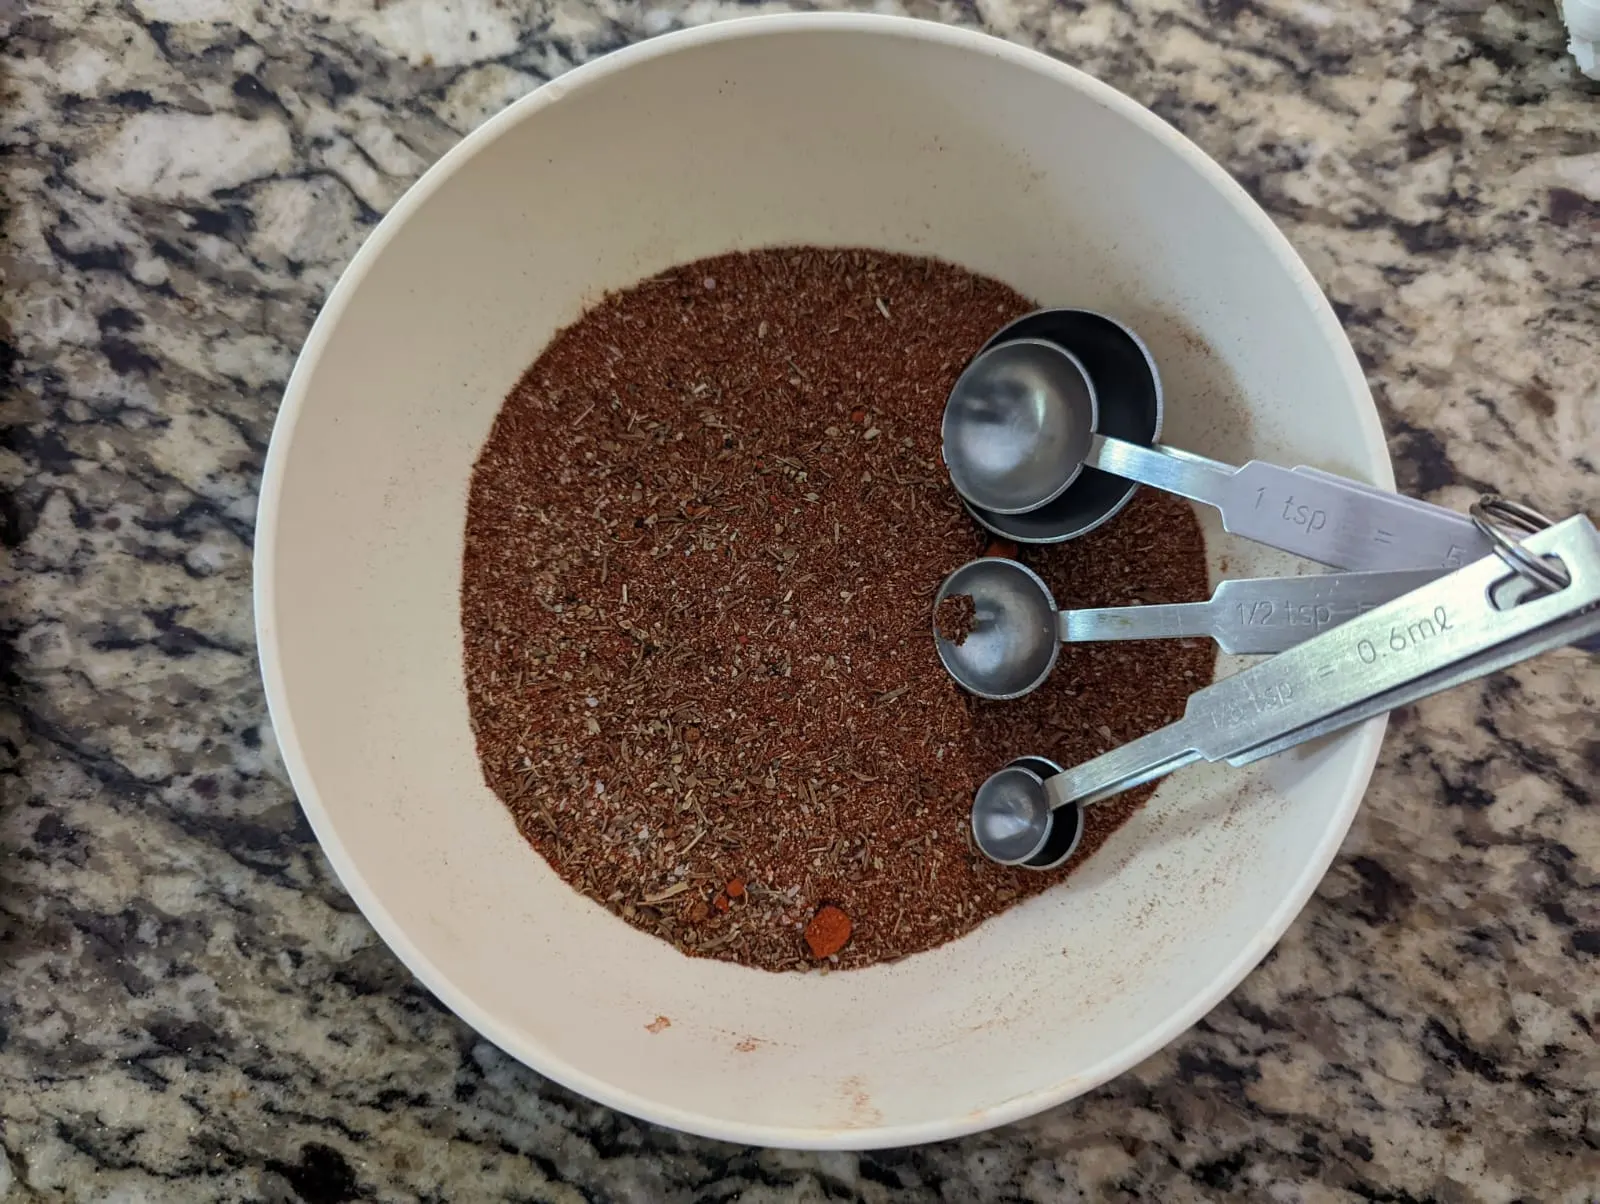 Cajun seasoning in a small bowl.